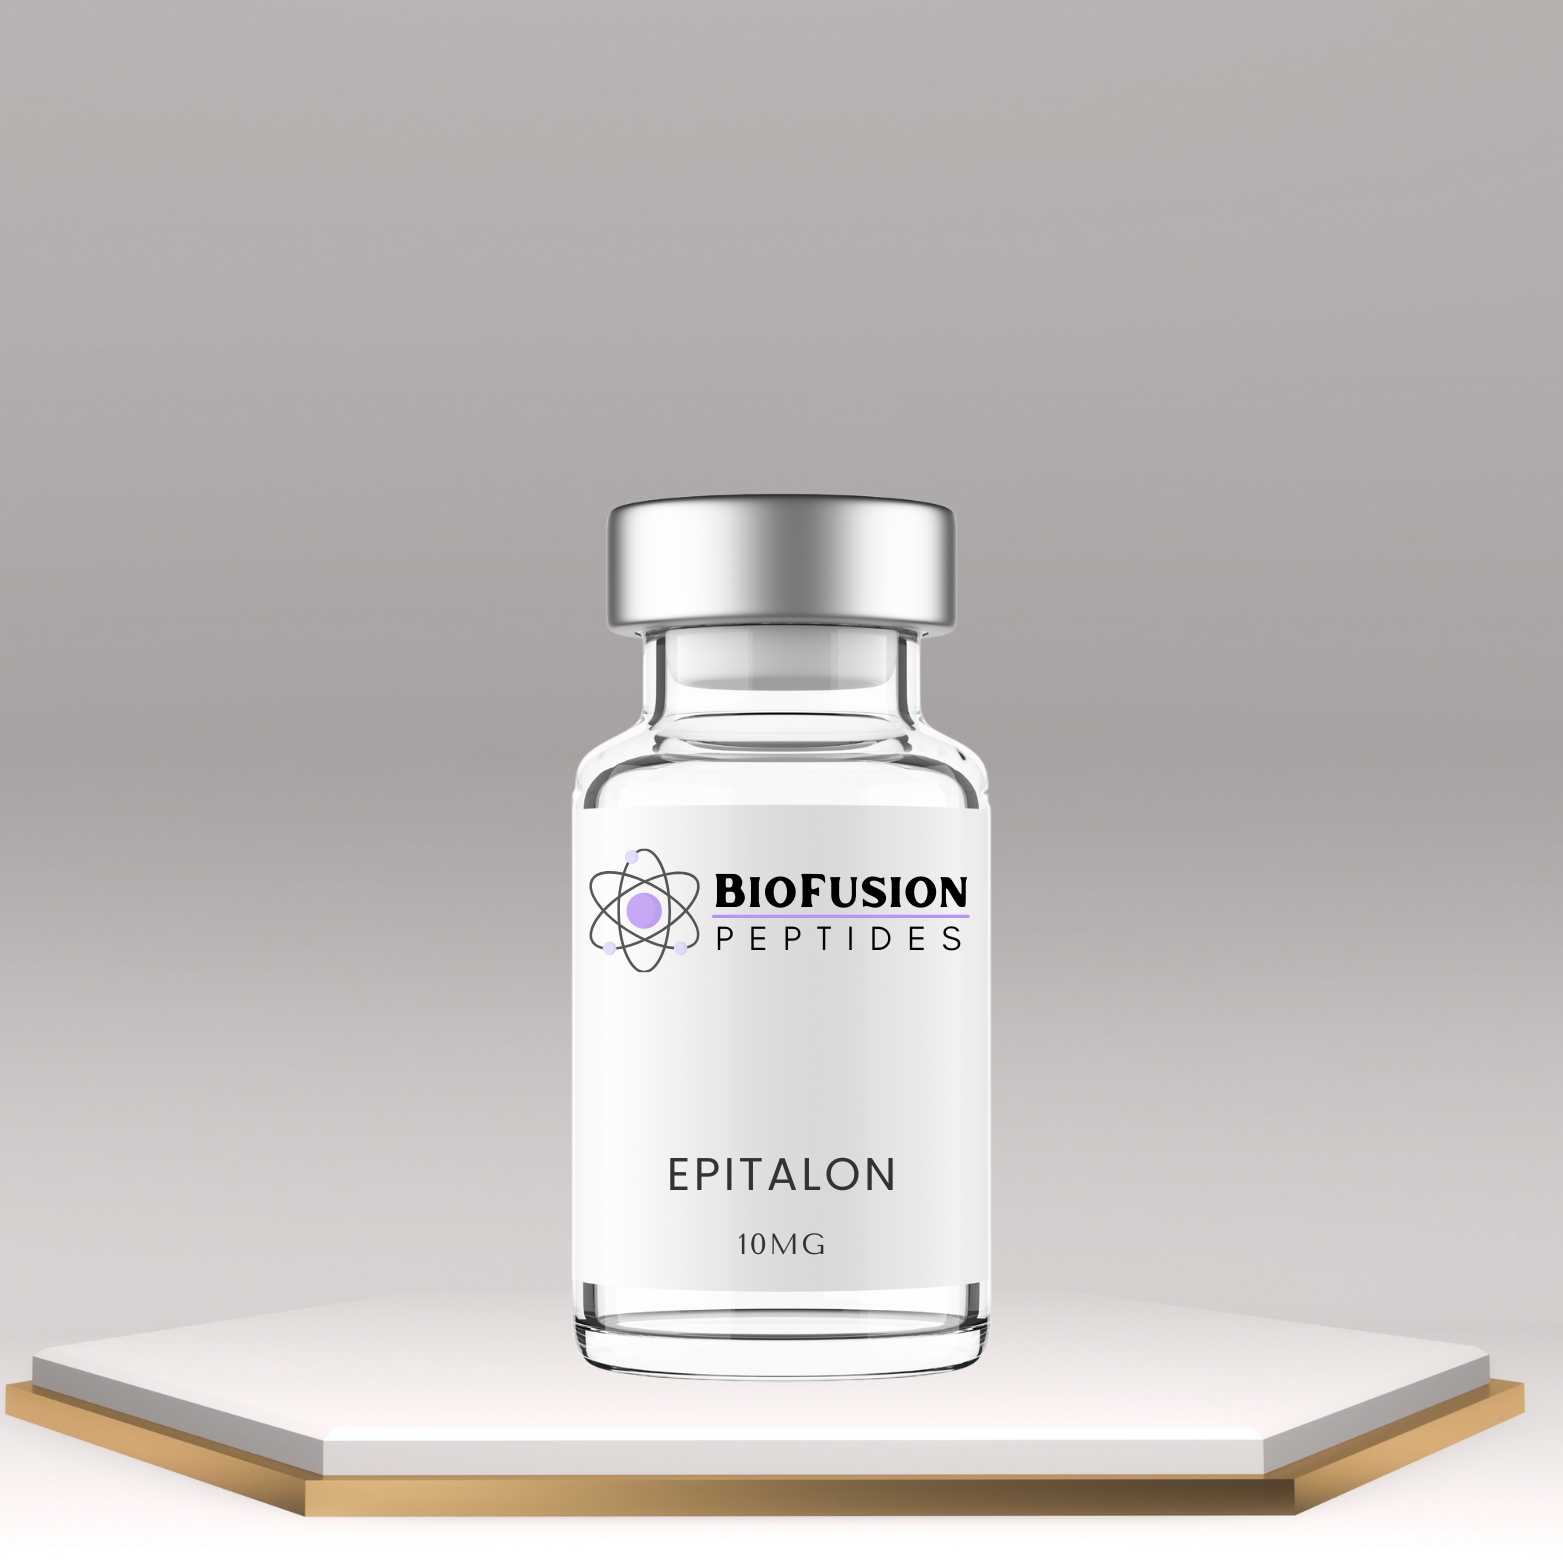 BioFusion Peptides Epitalon 10MG vial